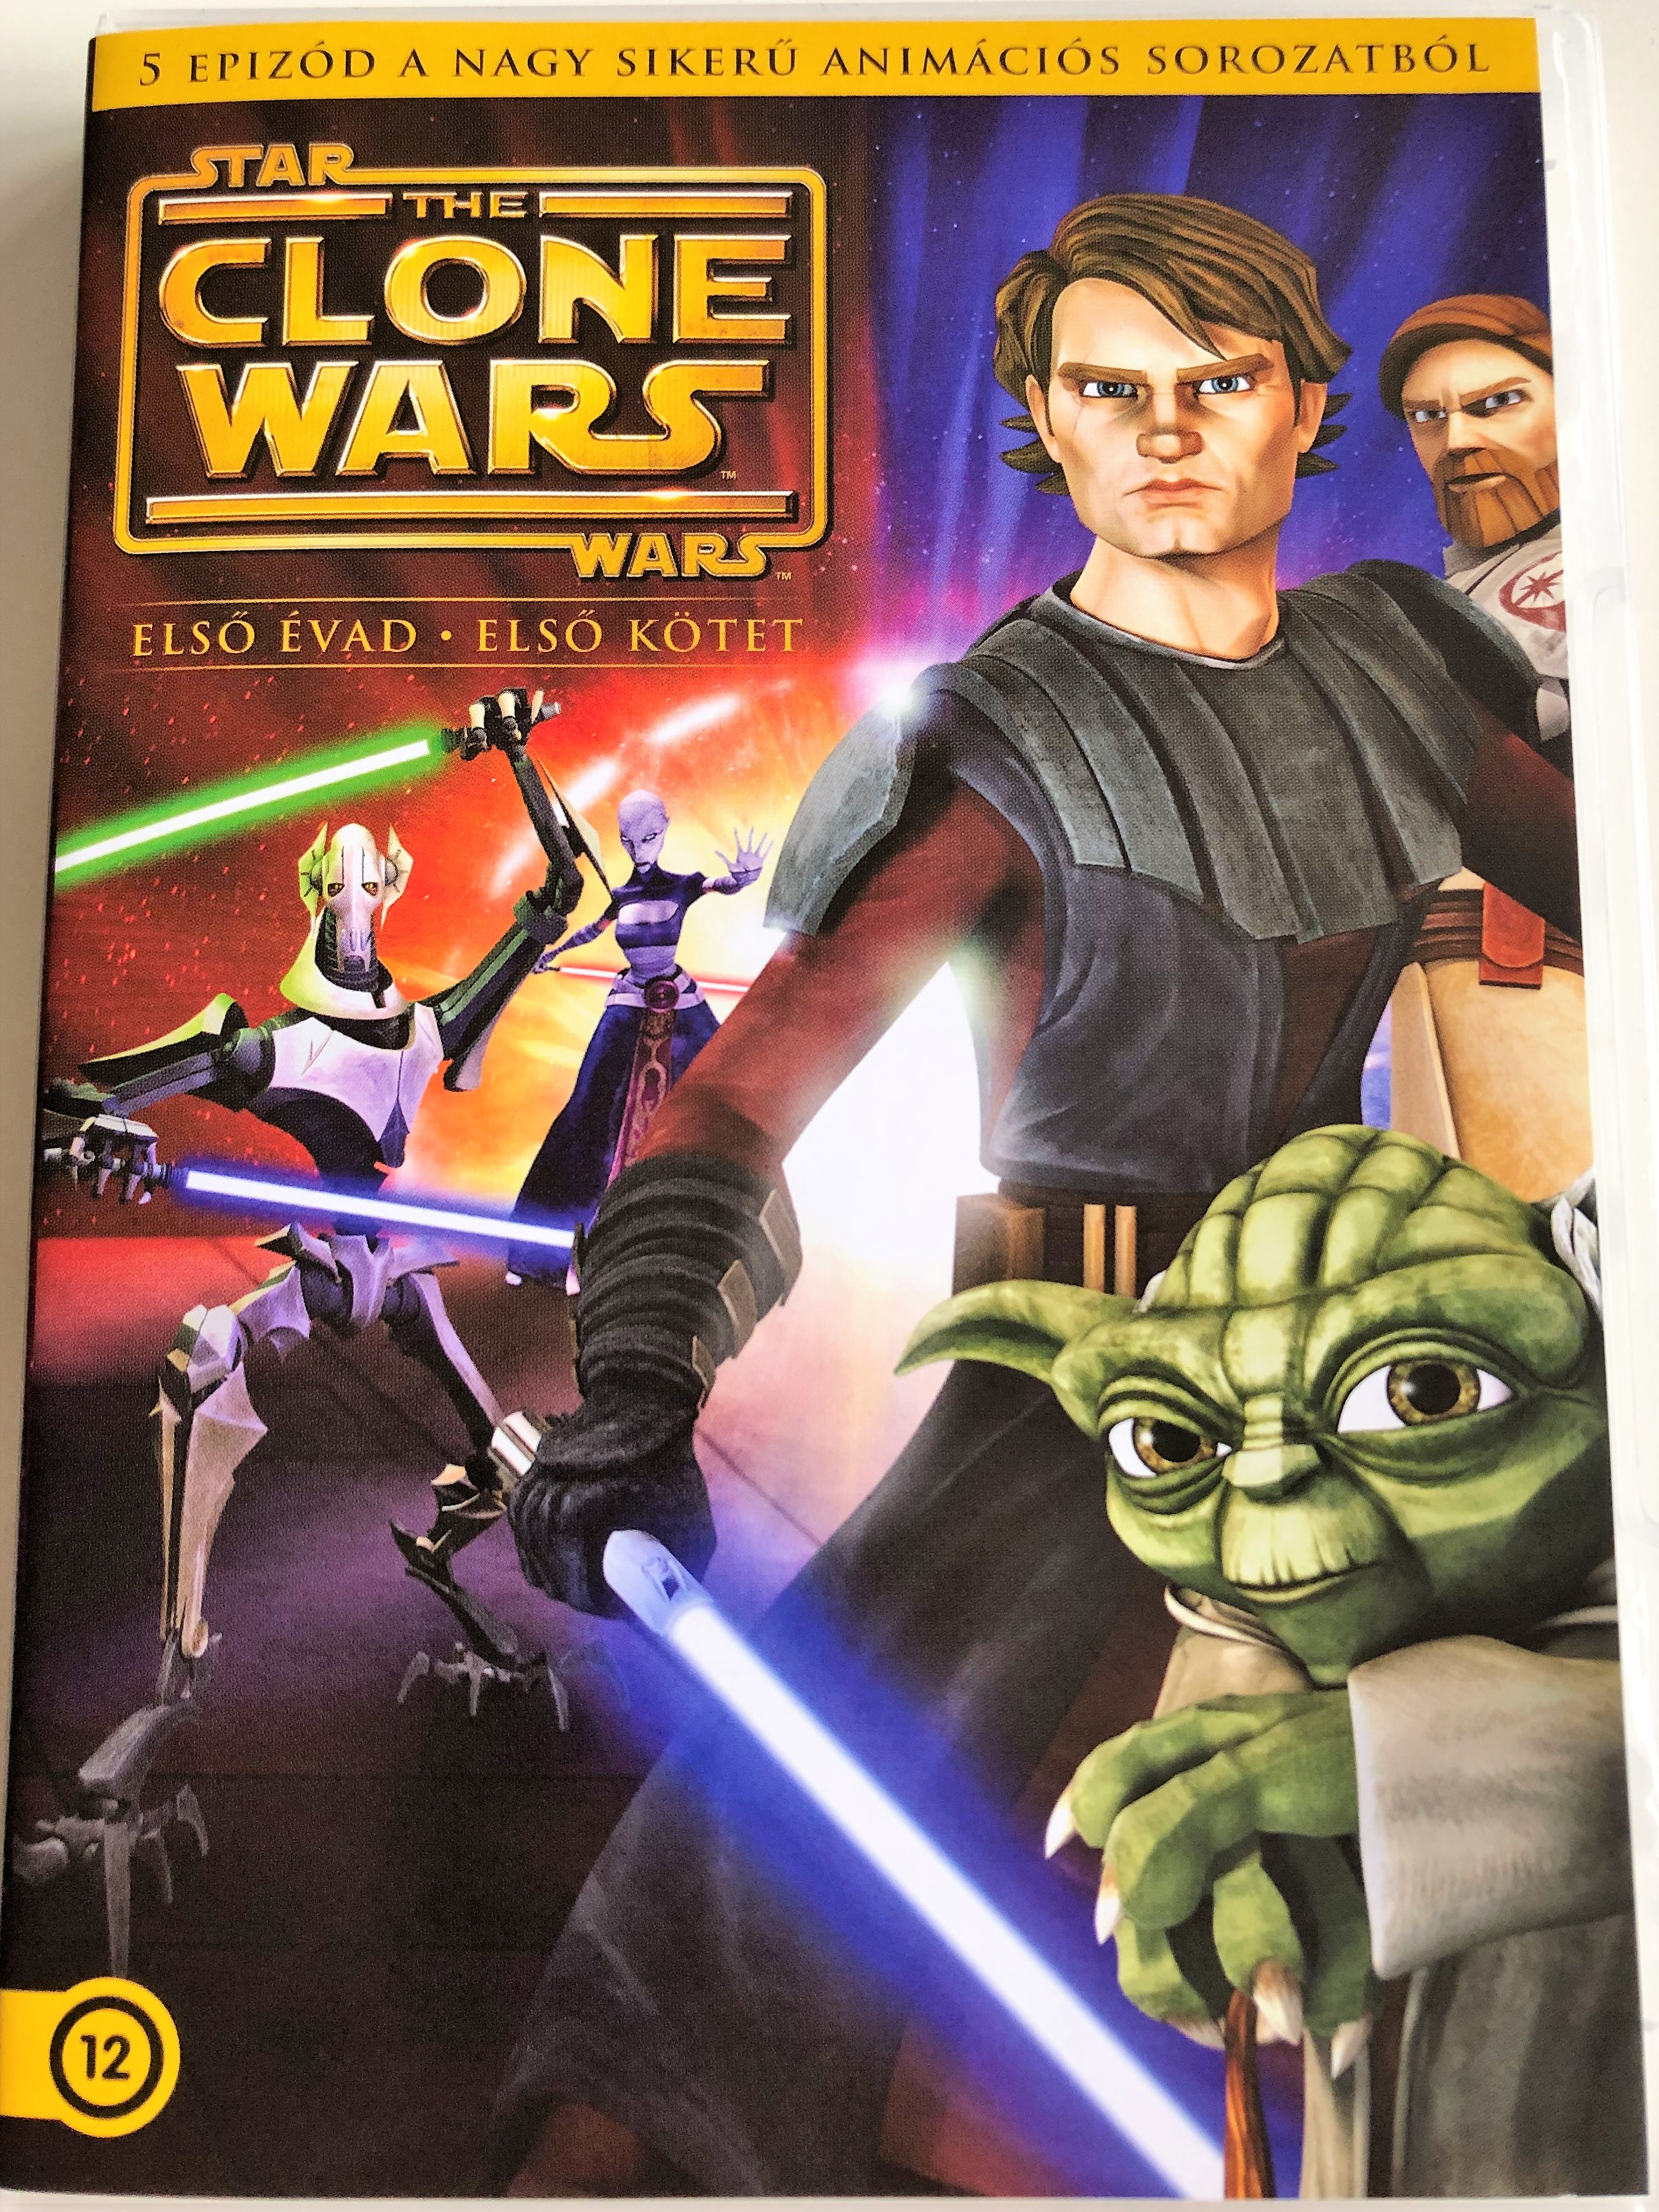 star-wars-the-clone-wars-season-1-volume-1-dvd-2008-star-wars-a-kl-nok-h-bor-ja-els-vad-els-k-tet-animated-tv-series-created-by-george-lucas-5-episodes-on-dvd-1-.jpg